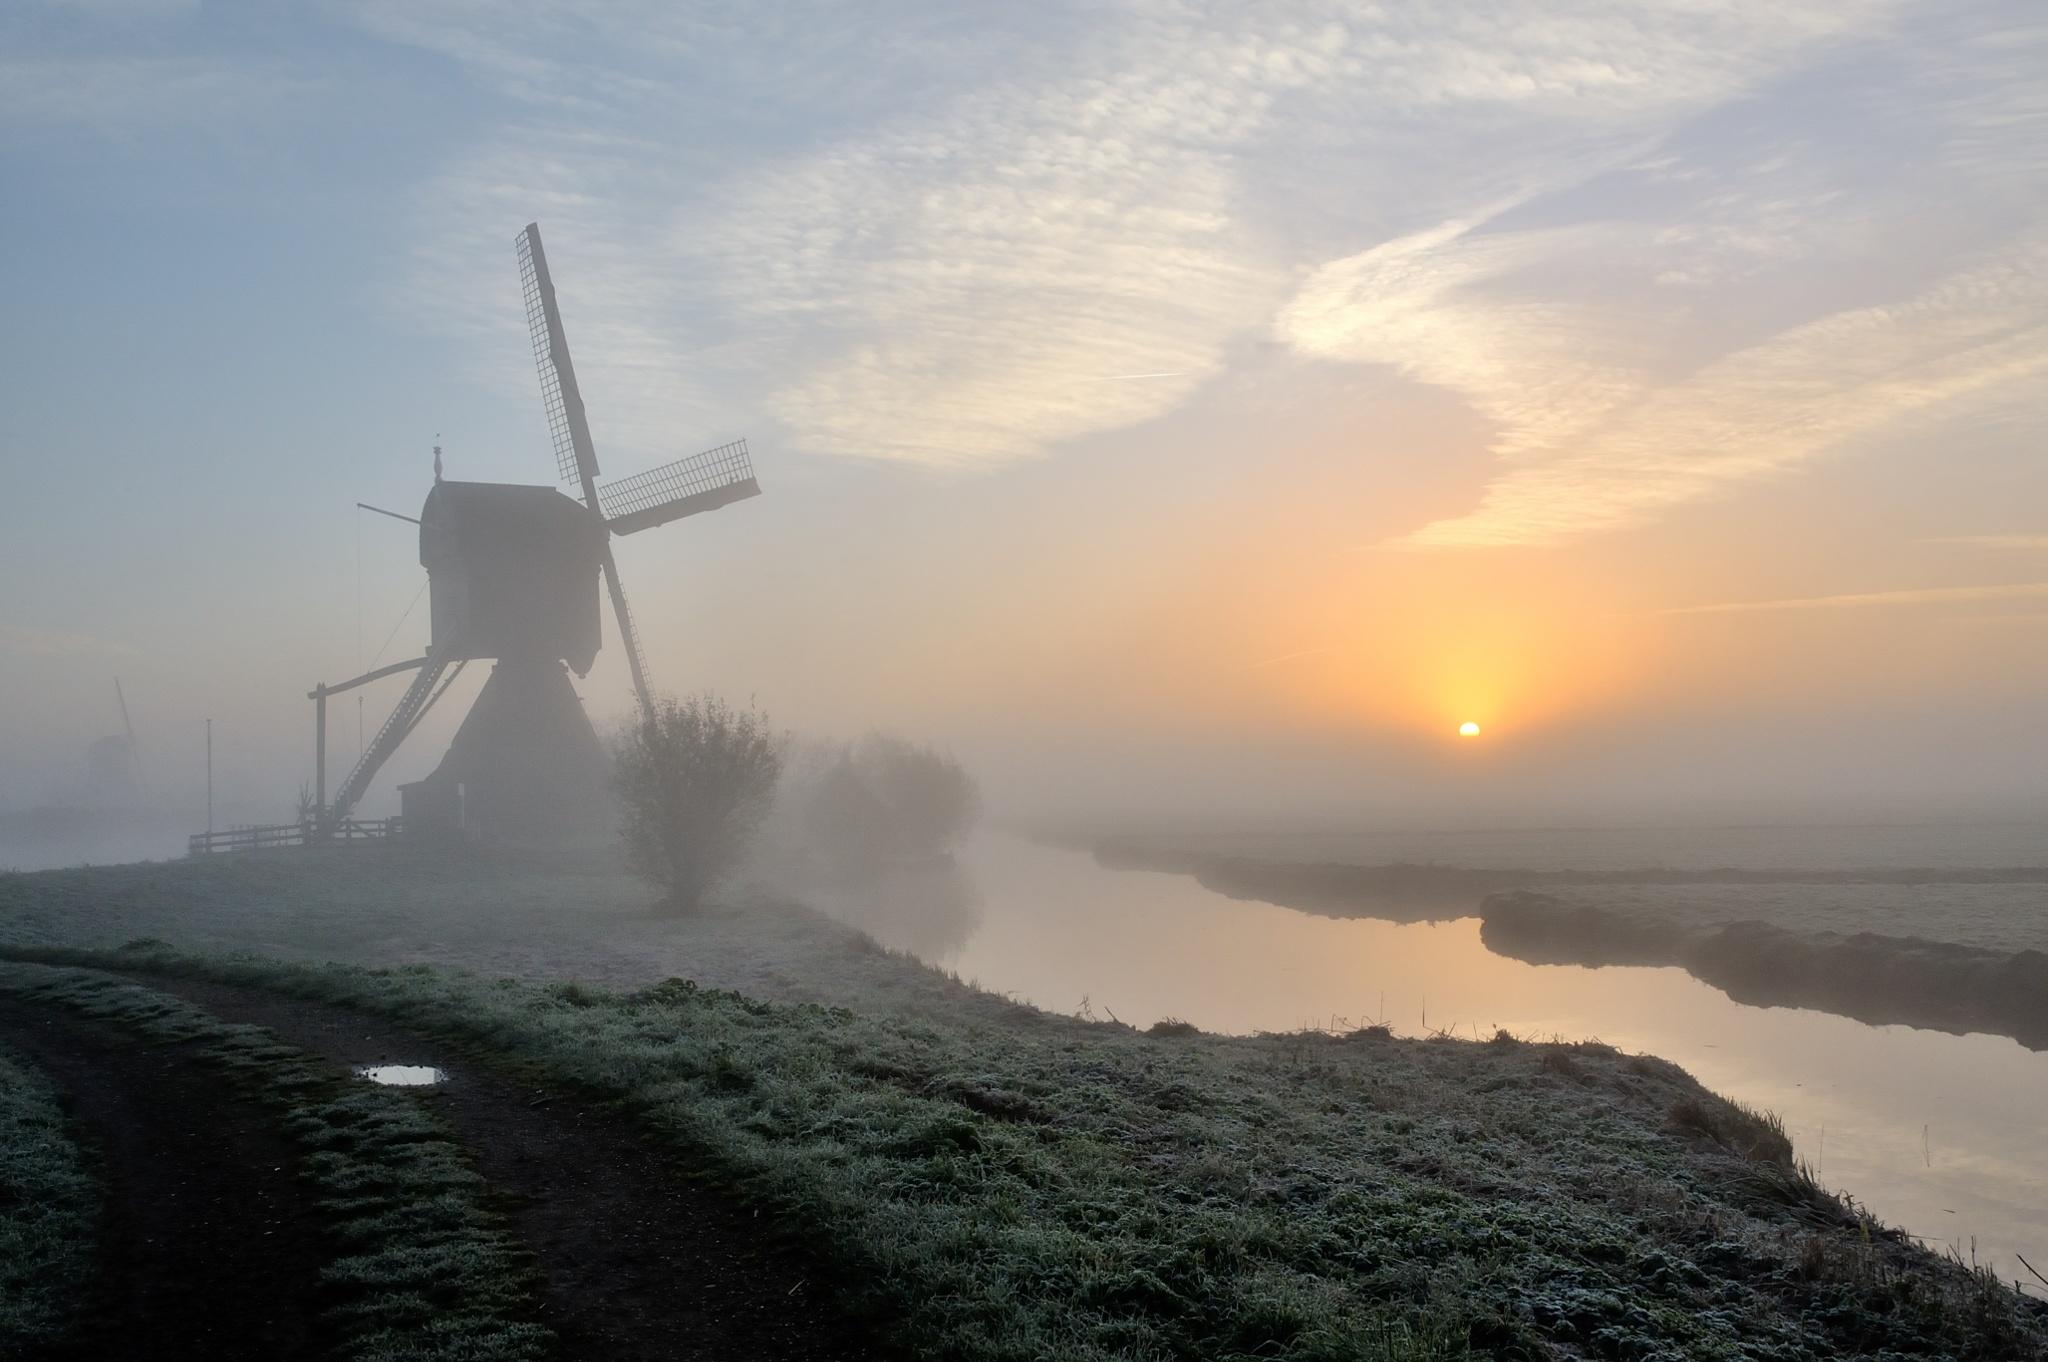 Foggy Sunrise at Kinderdijk